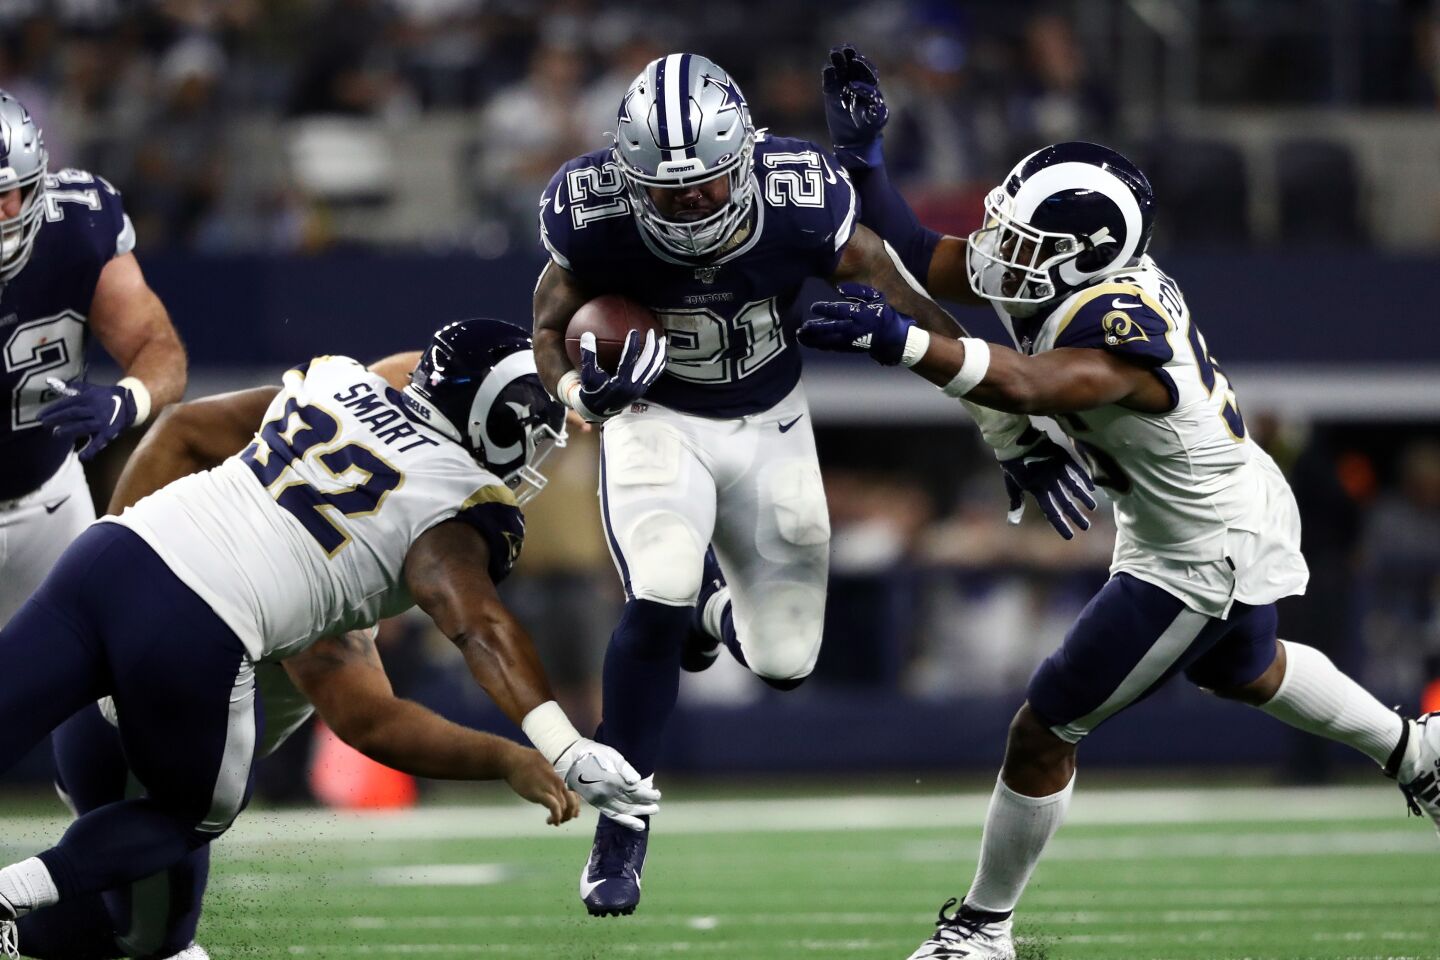 Dallas Cowboys running back Ezekiel Elliott runs past the Rams' defense during the second half.